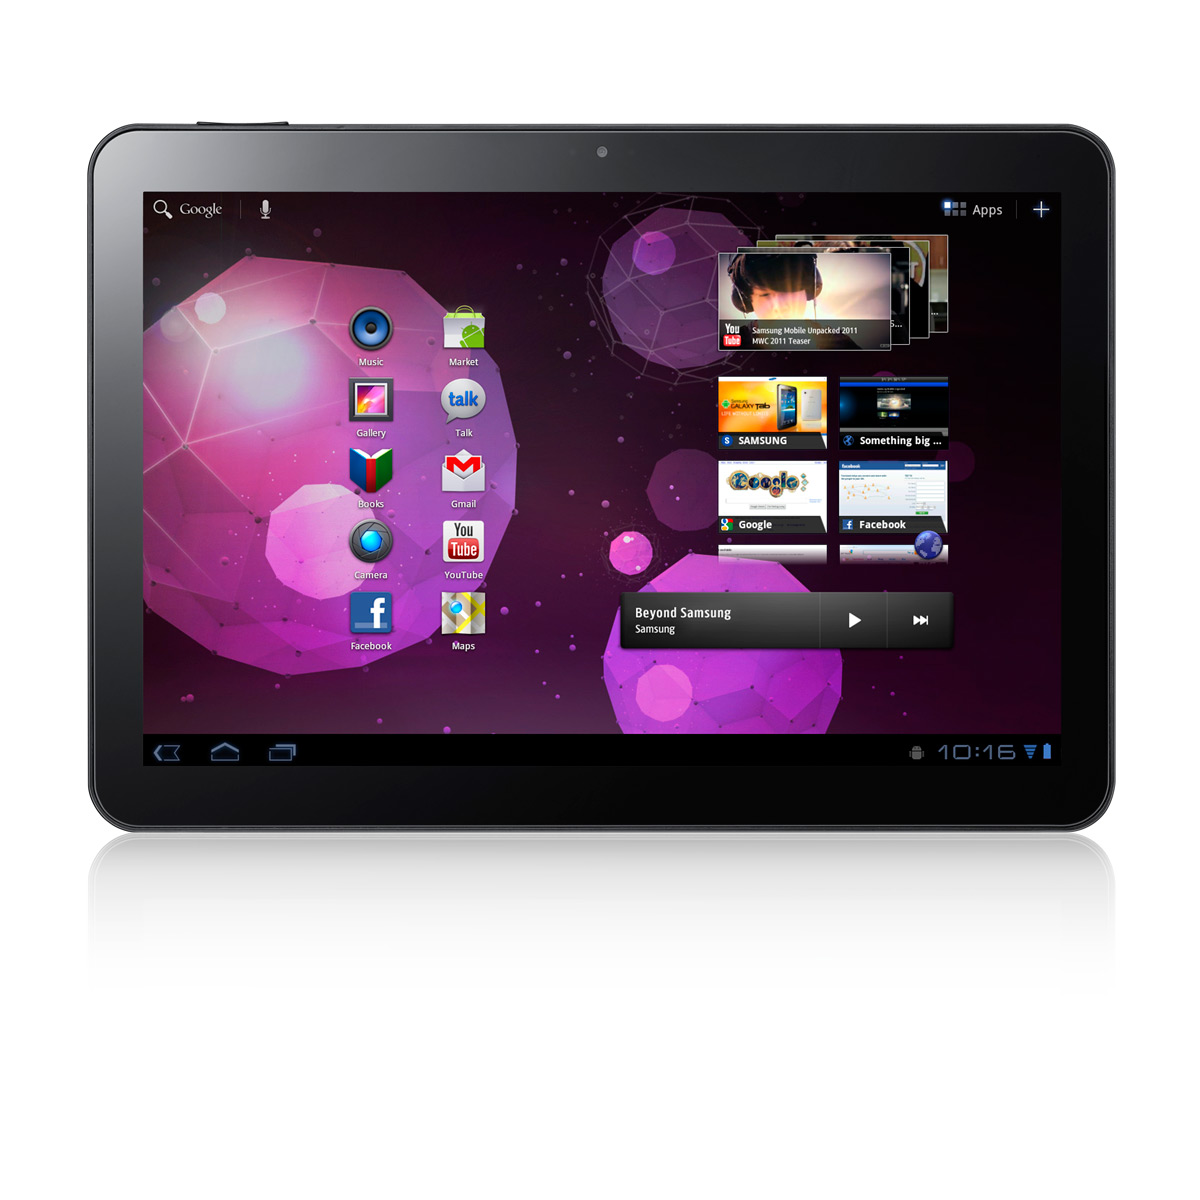  Tablet  Android Murah  Terbaik 2012 Solo Nge Blog